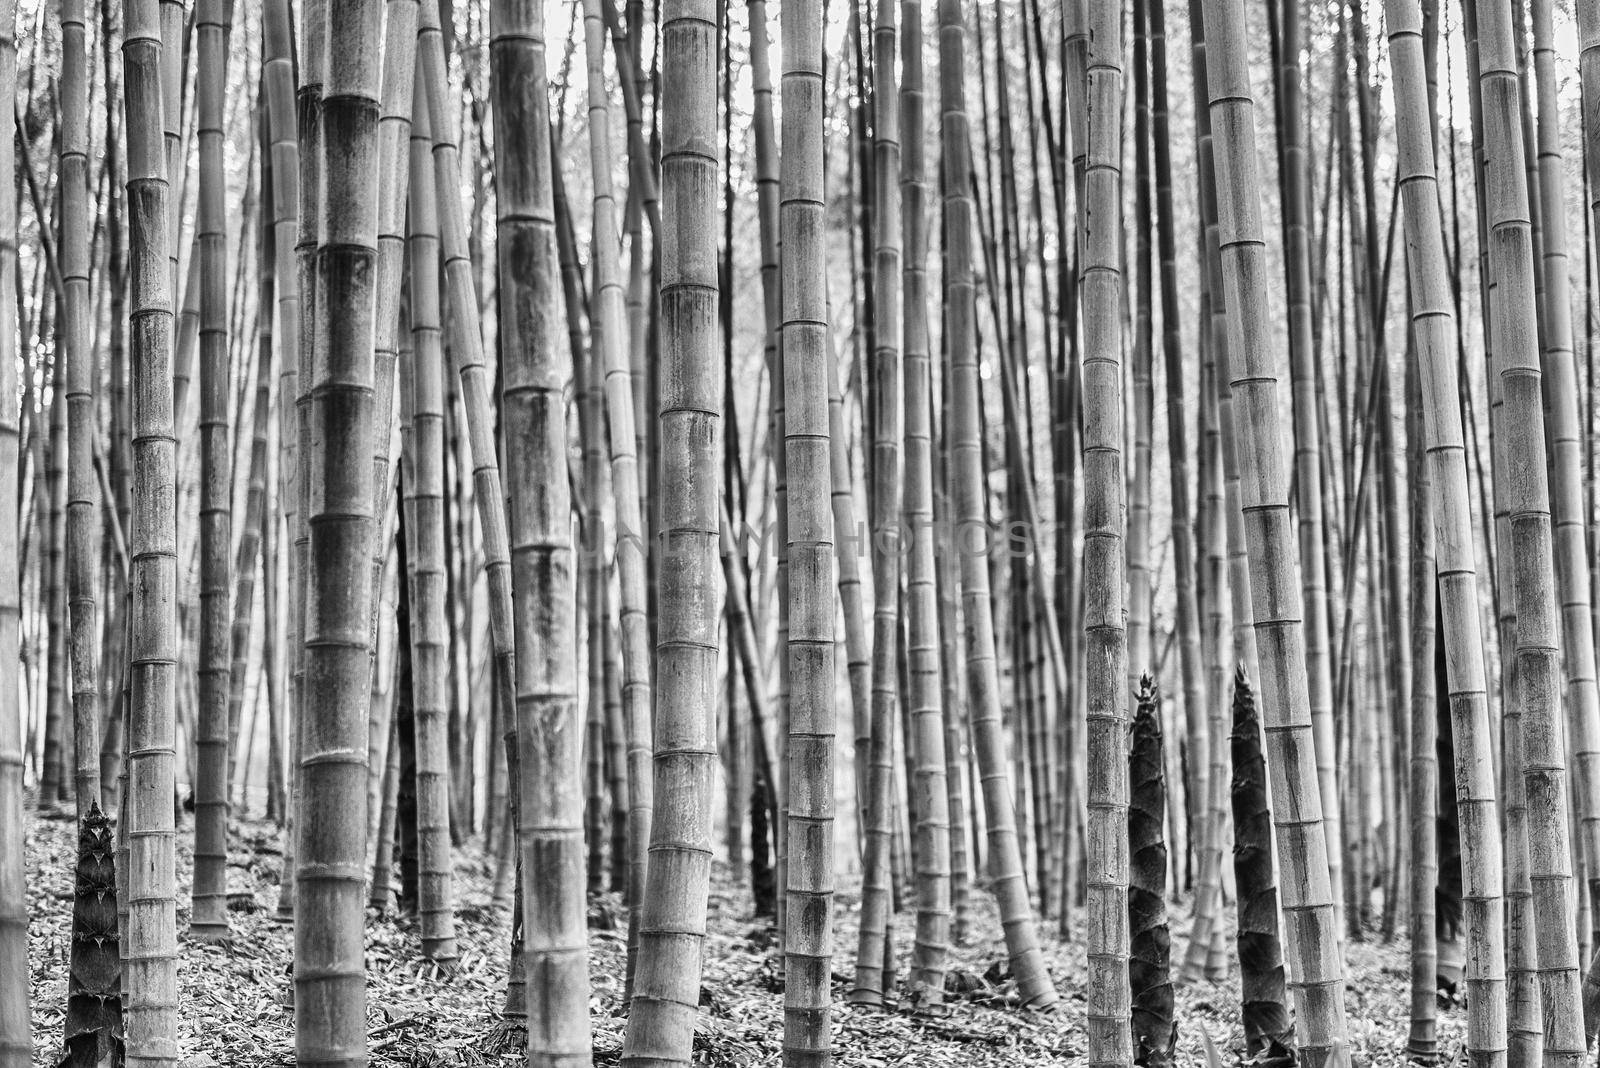 Background with foliage pattern of bamboo trees by marcorubino